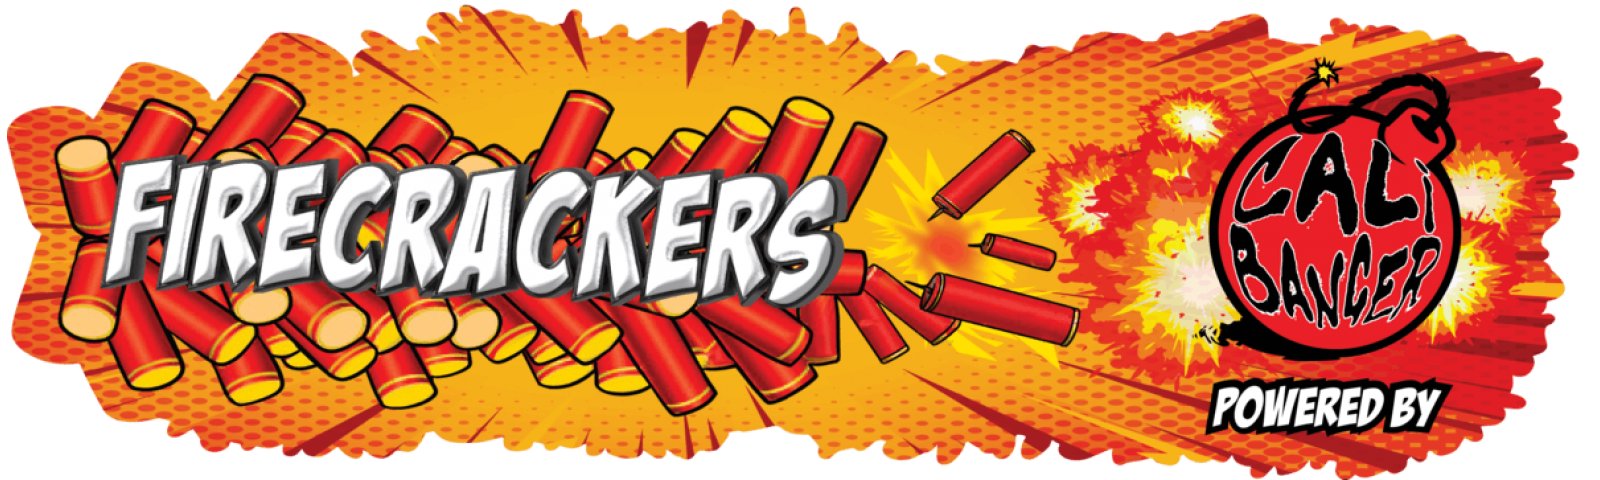 Firecrackers 